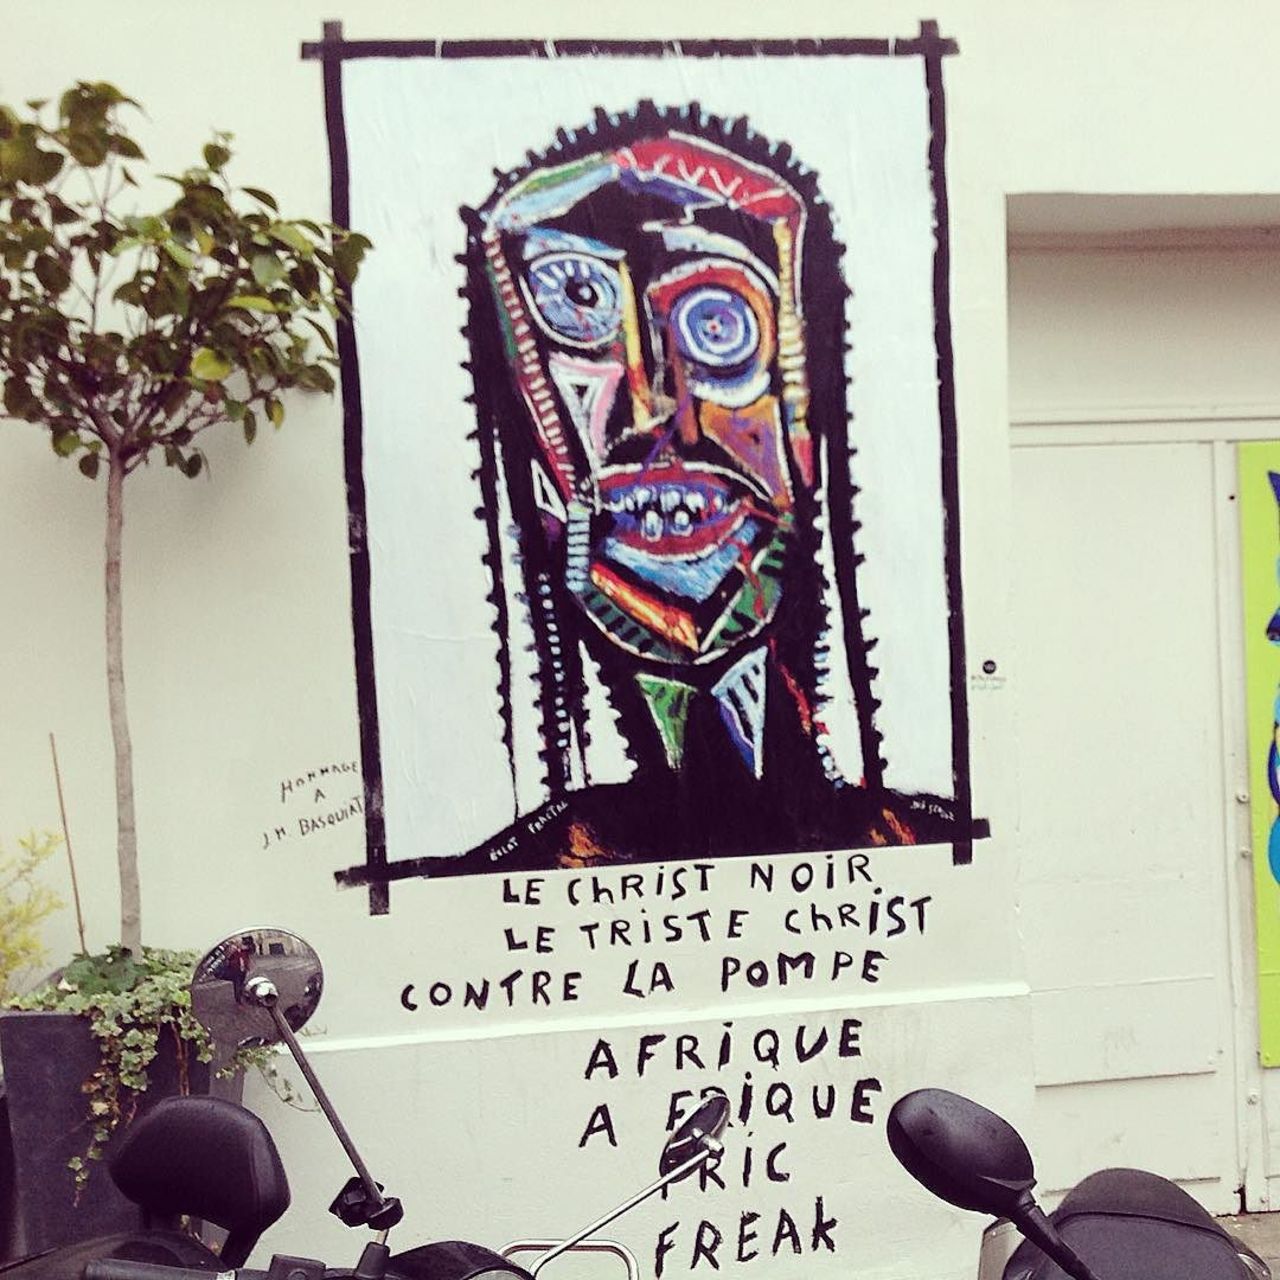 #Paris #graffiti photo by @stefetlinda http://ift.tt/1O3DrWu #StreetArt https://t.co/zi1M8U3euG